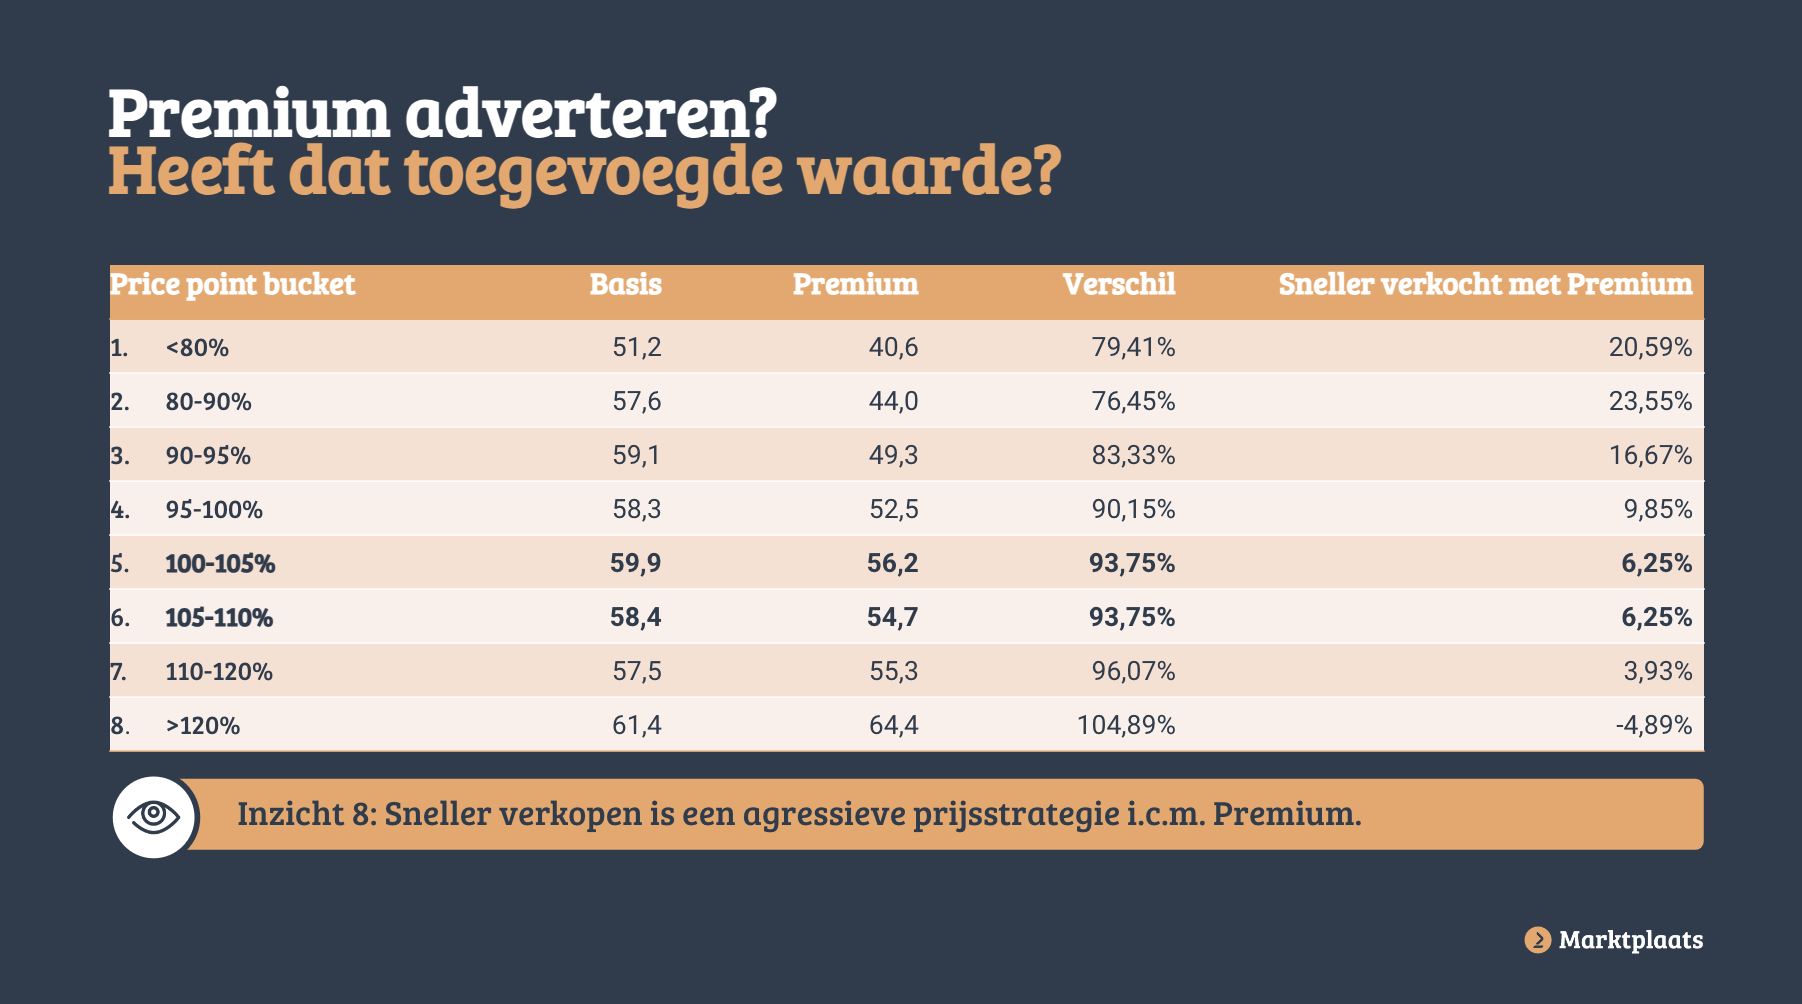 The added value of premium advertising on Marktplaats